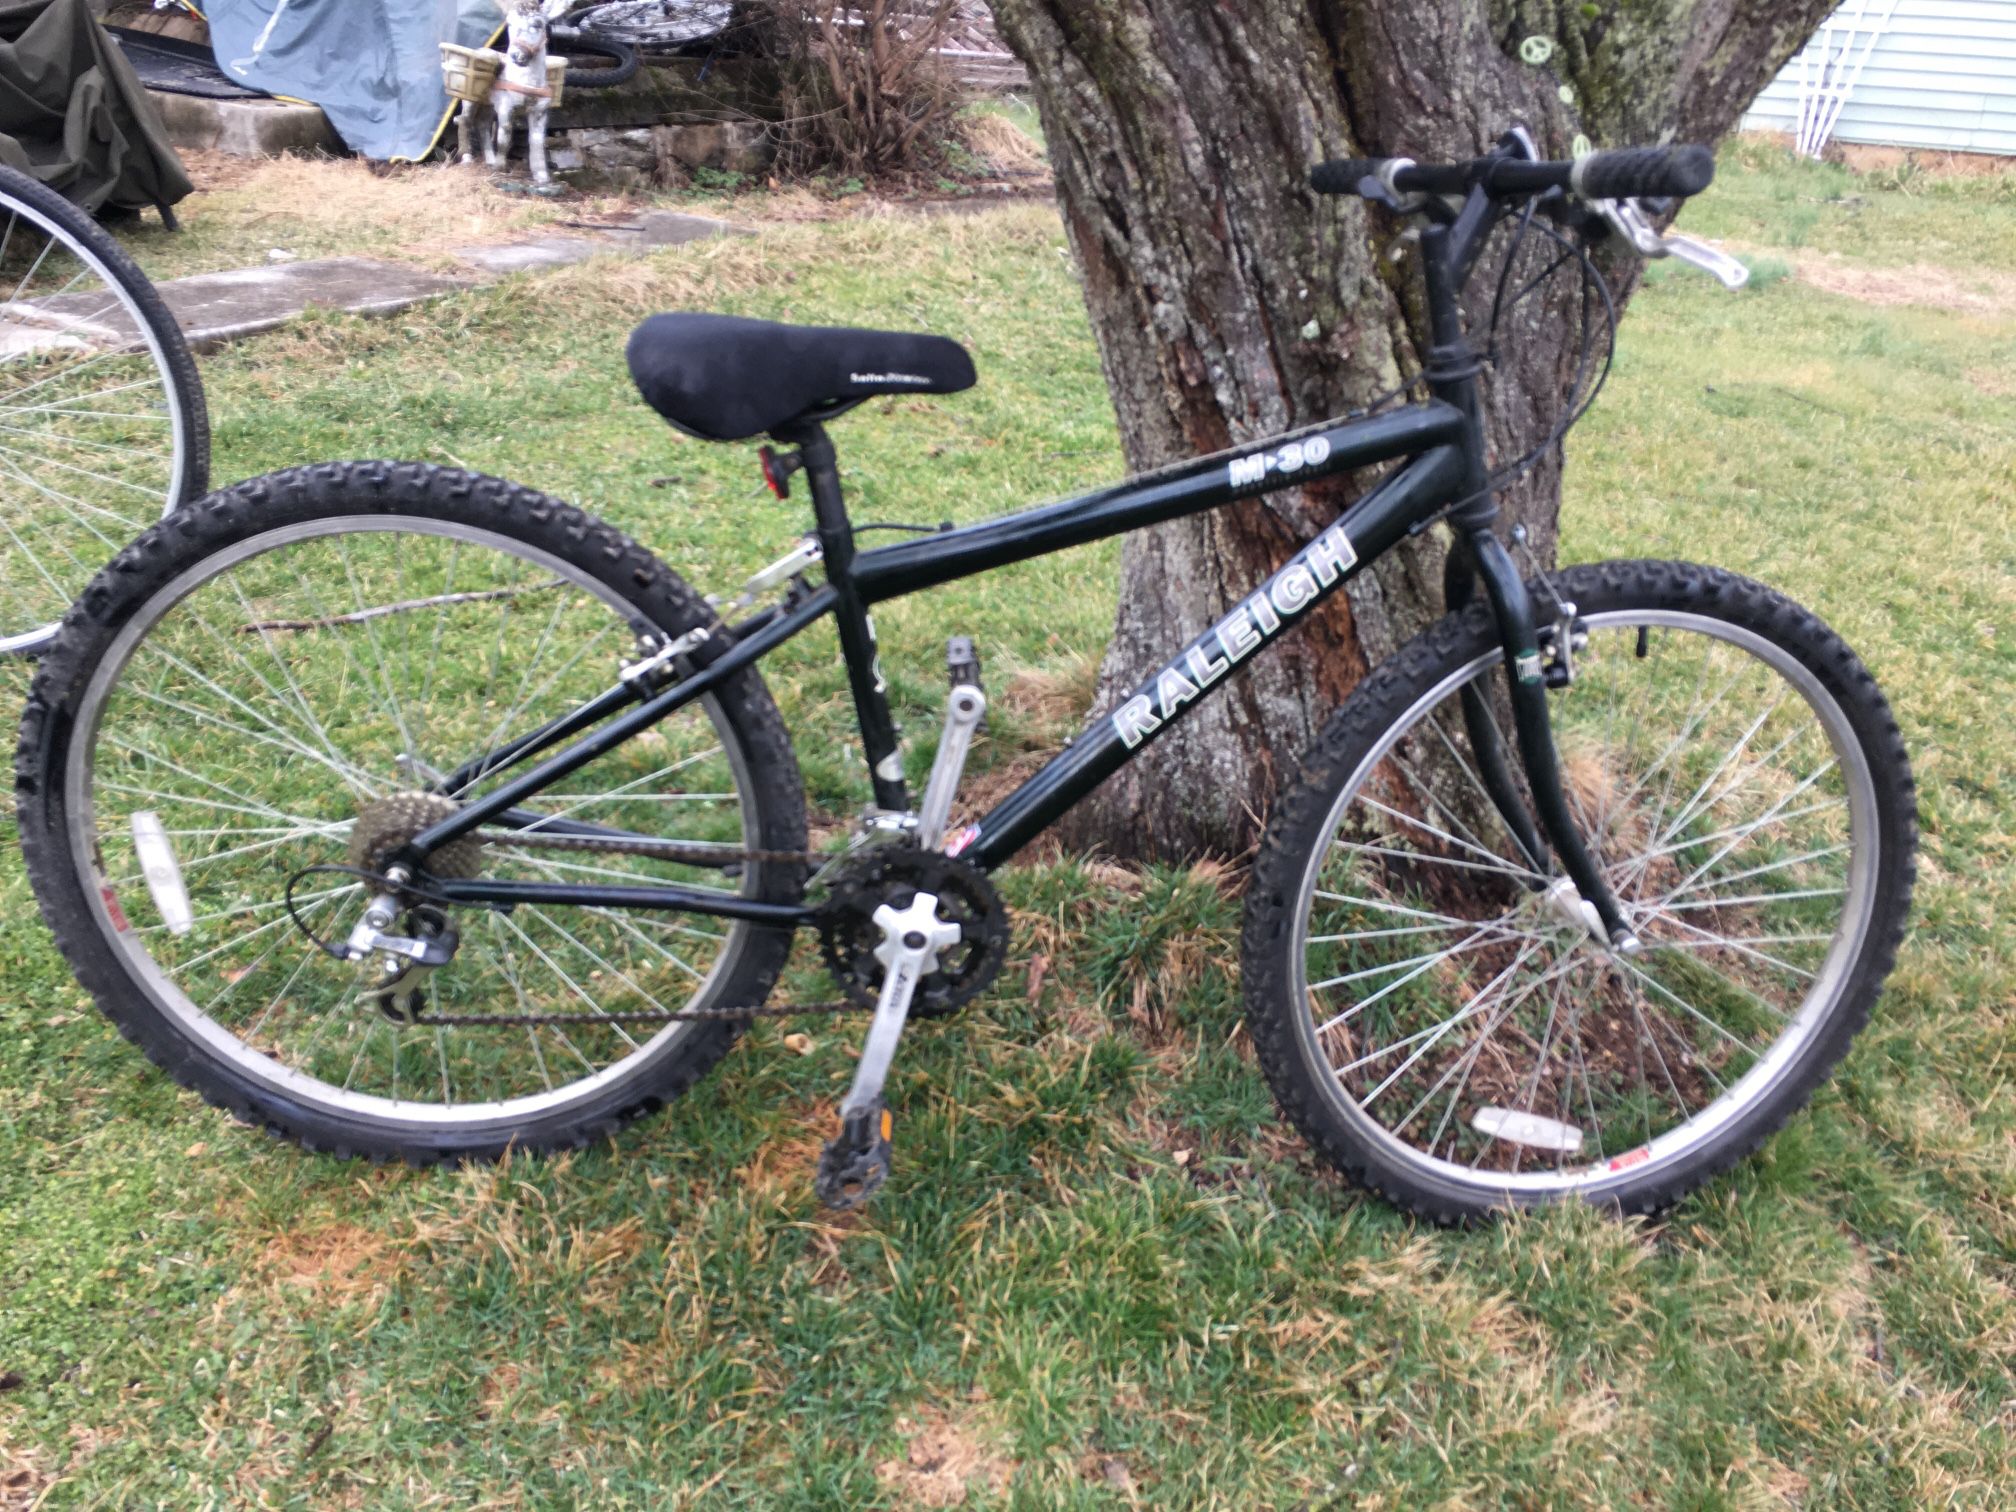  Raleigh Mountain Bike  $120